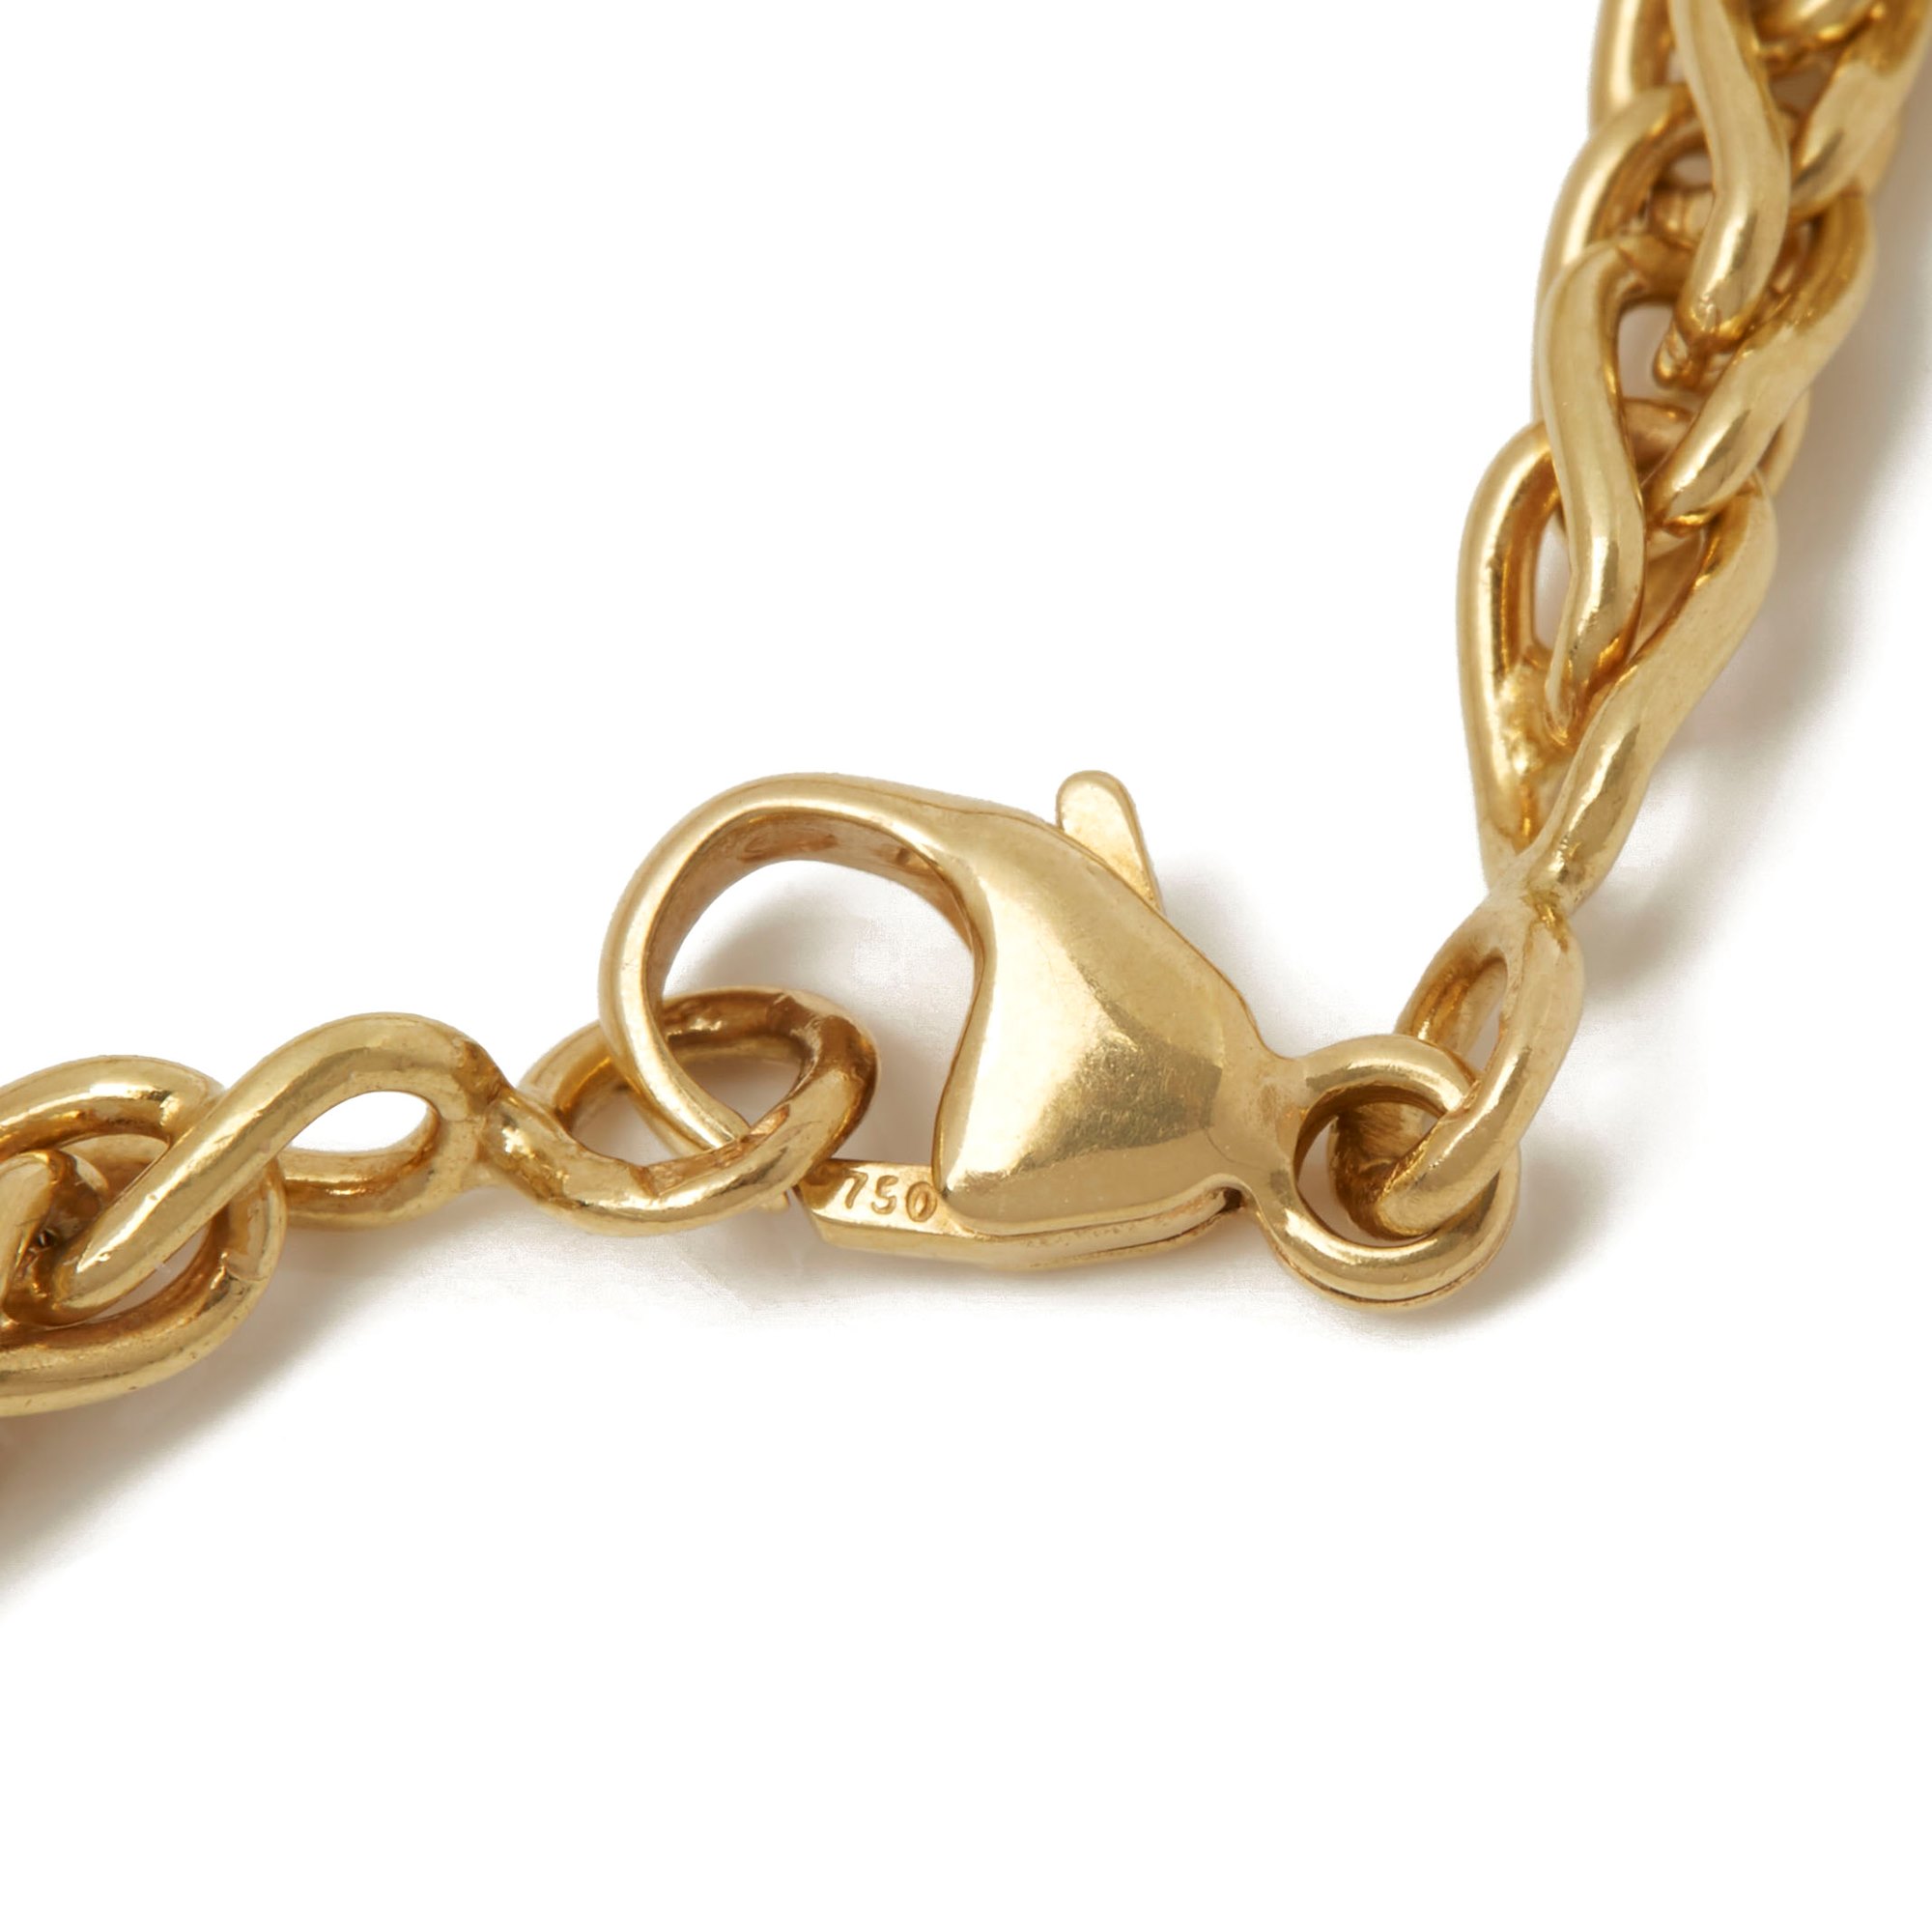 Boodles 18k Yellow Gold Diamond Hug Necklace